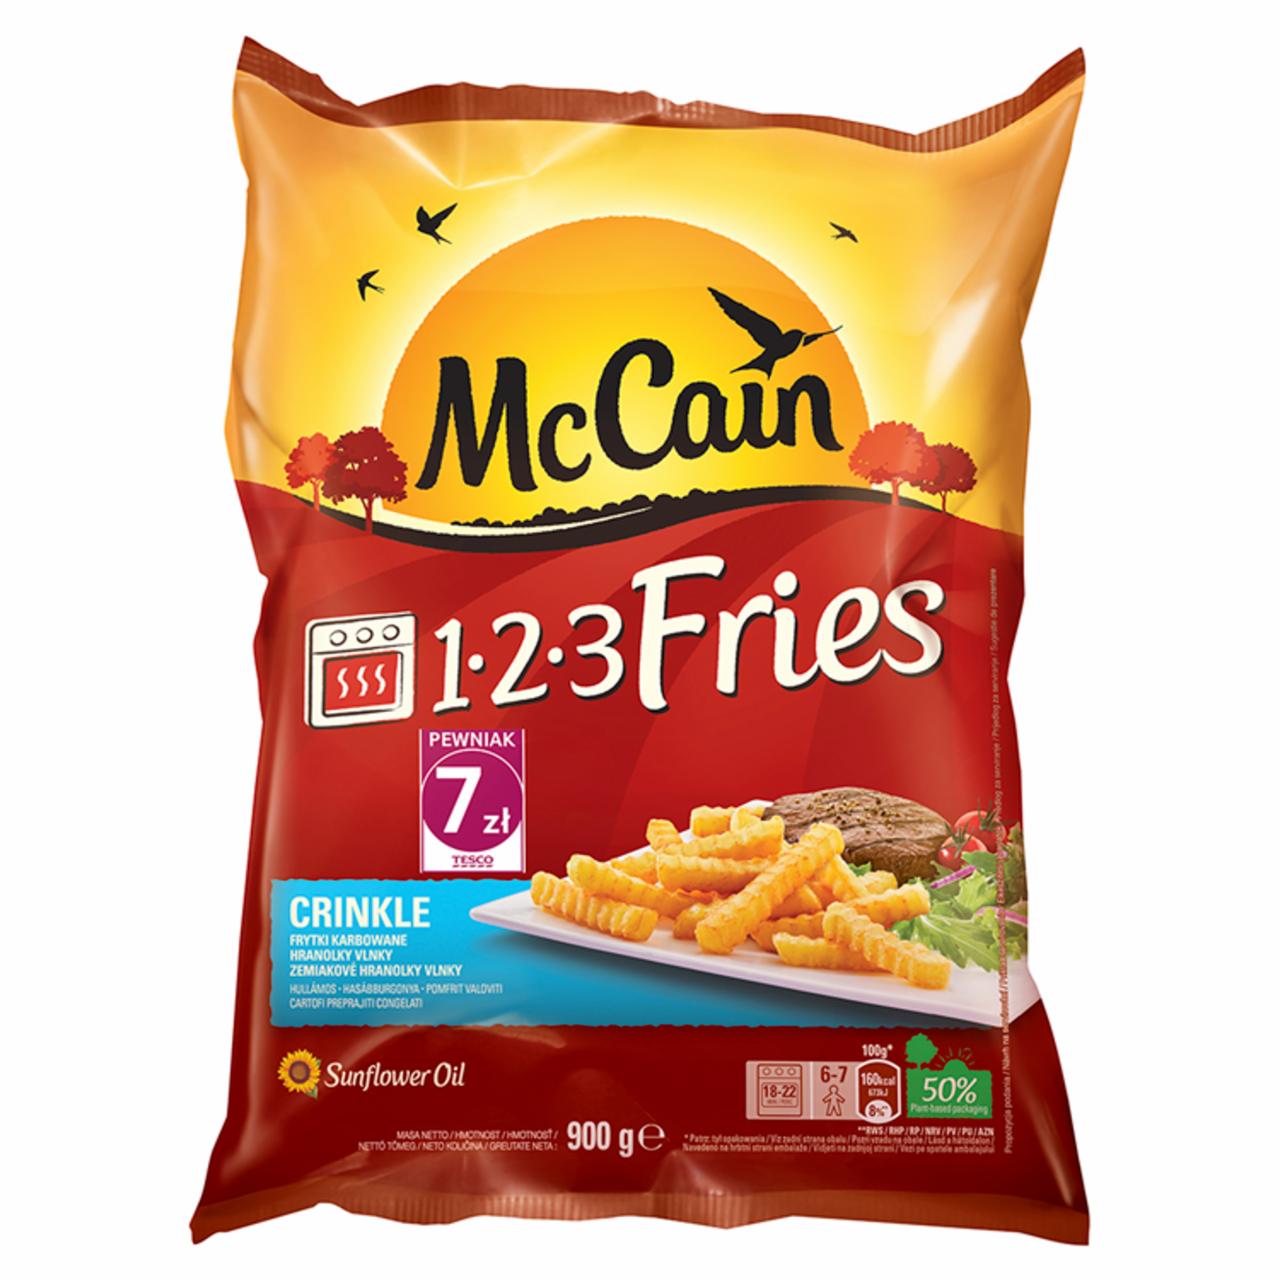 Zdjęcia - McCain 1.2.3 Fries Crinkle Frytki karbowane 900 g